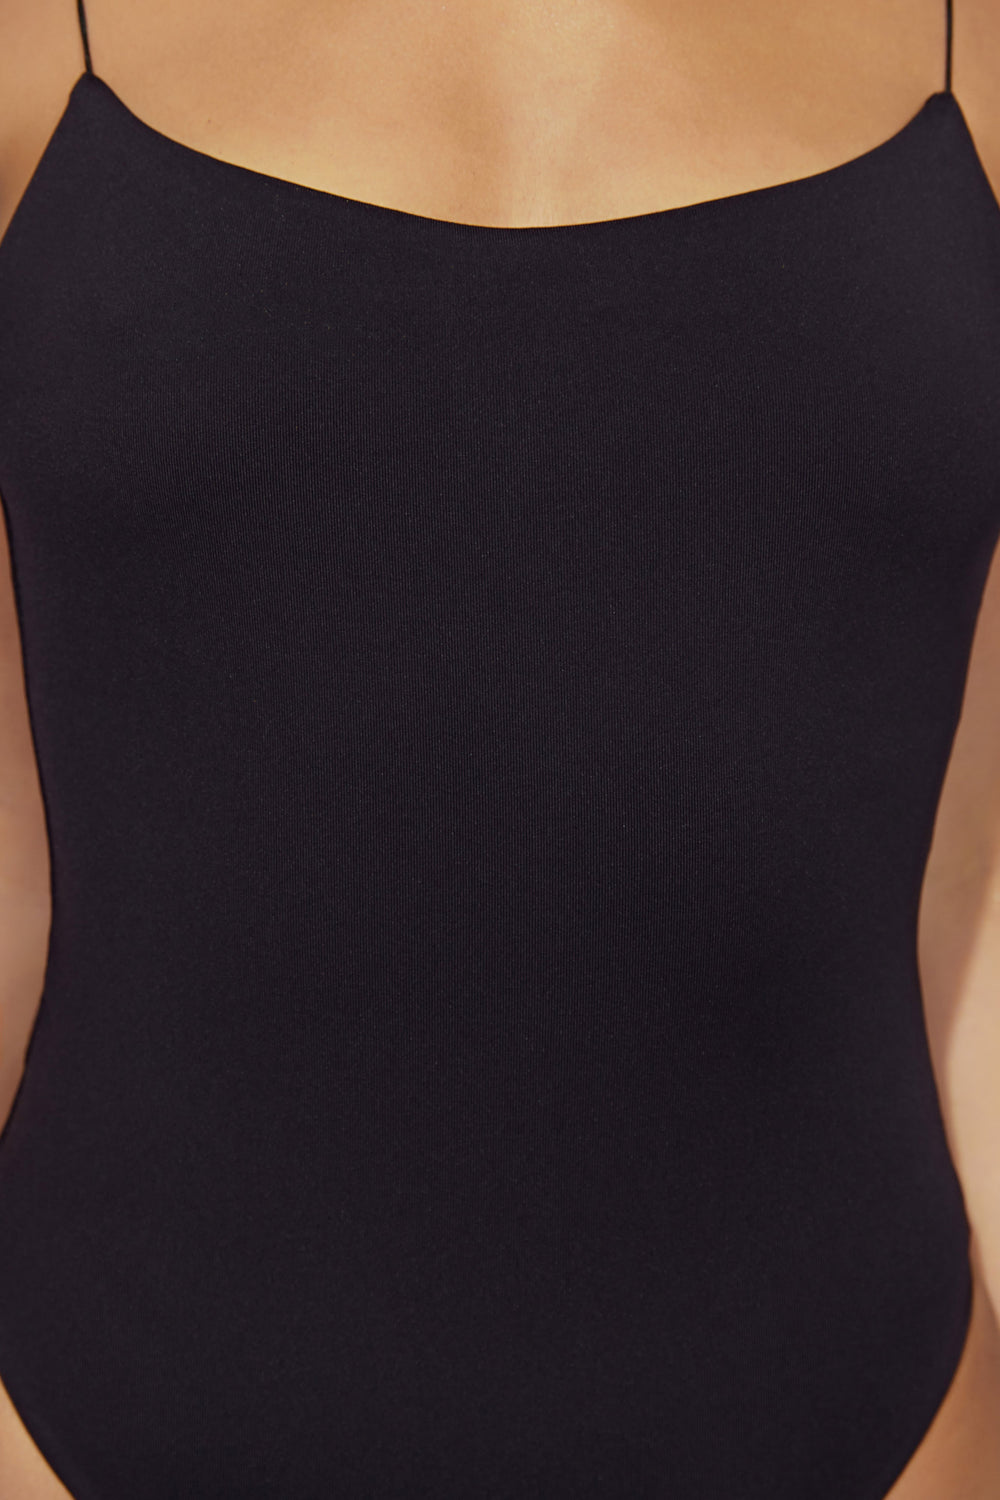 Valeria Low Back Thin Strap Bodysuit - Black